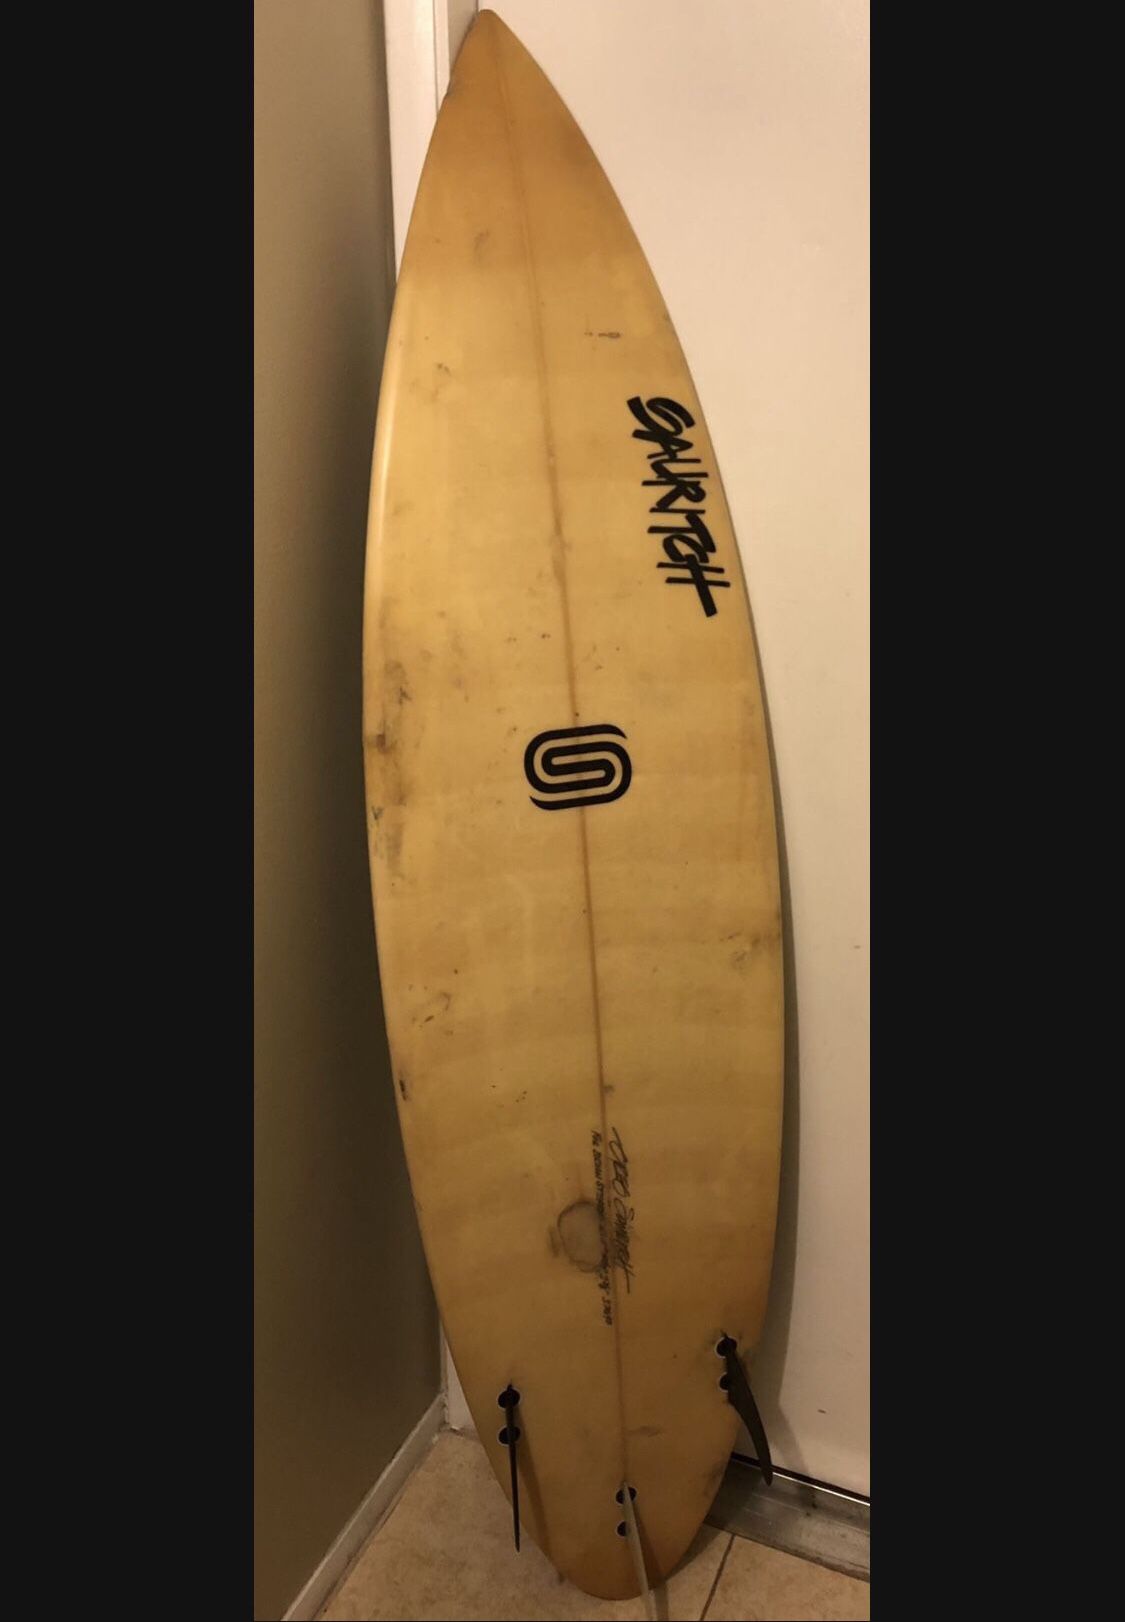 Vintage Sauritch surfboard